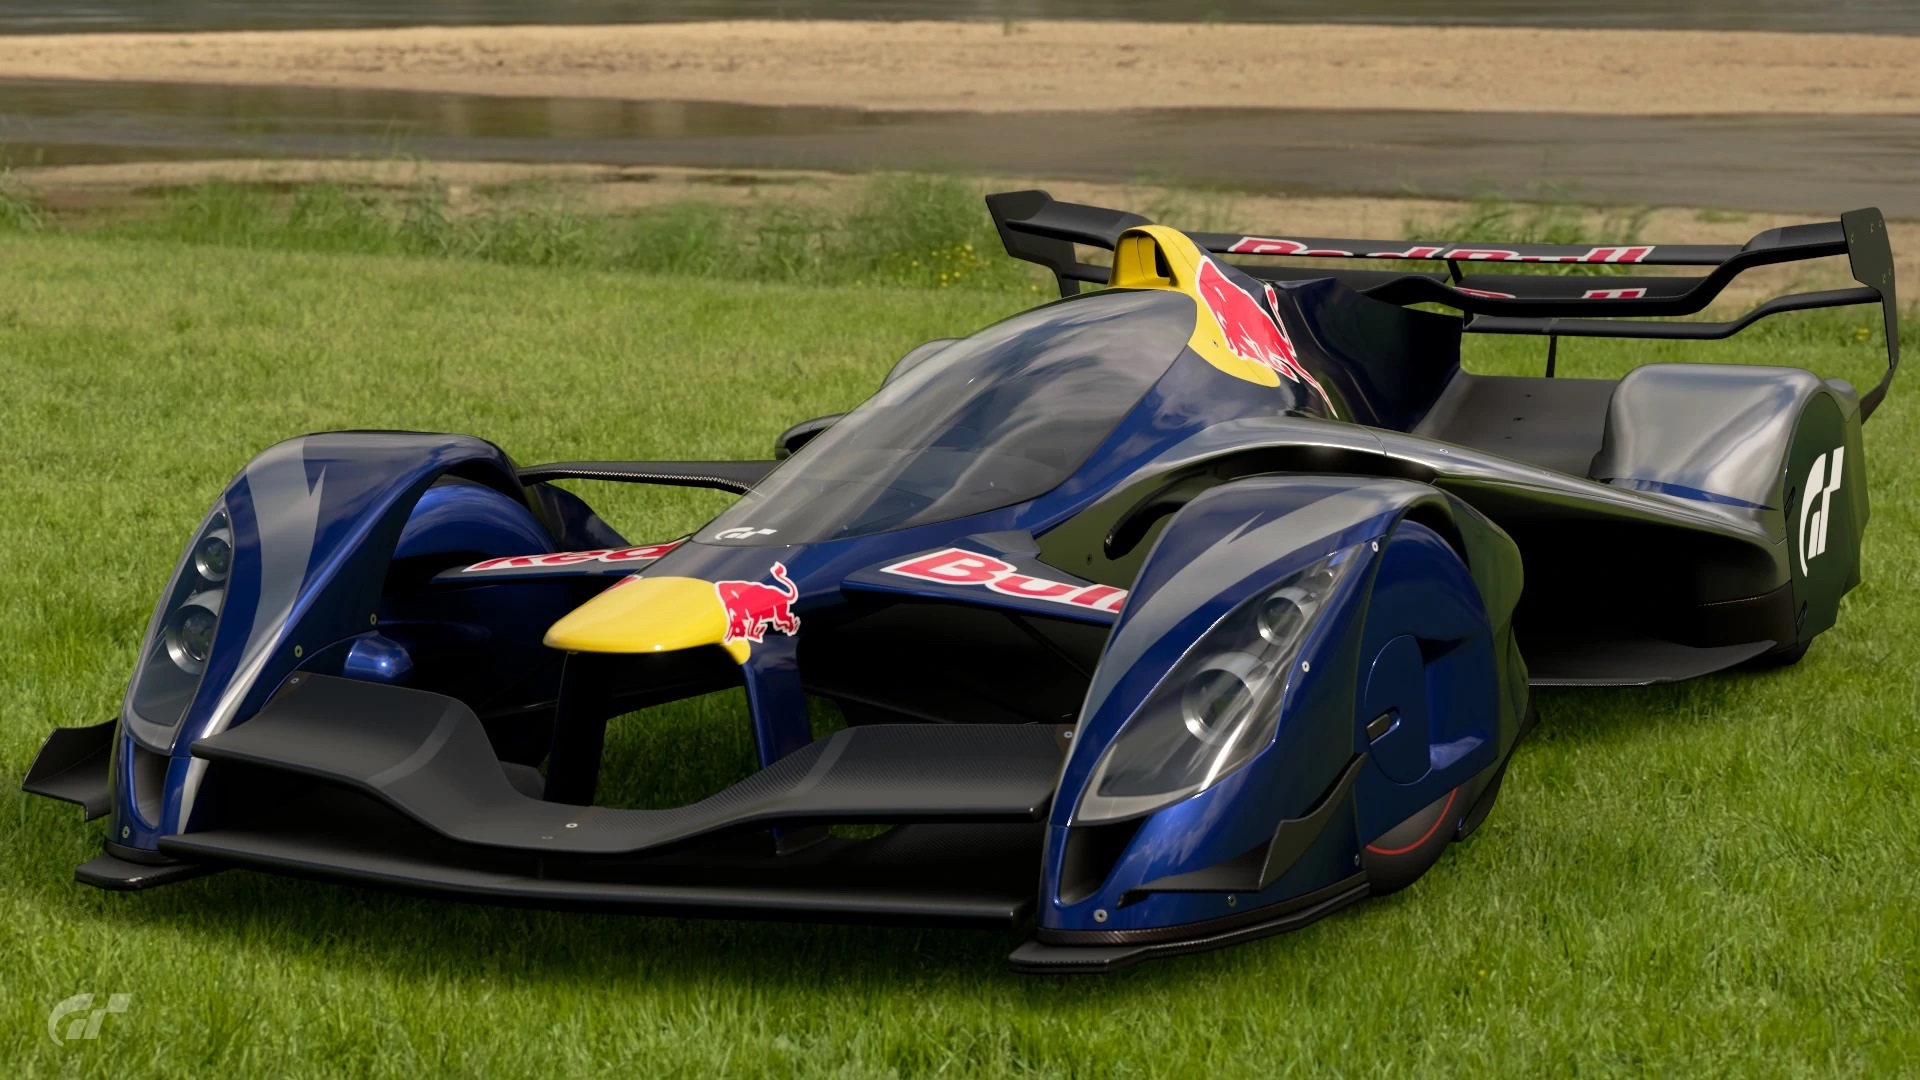 GT4 Photo Mode screenshot of the Red Bull X214 race car